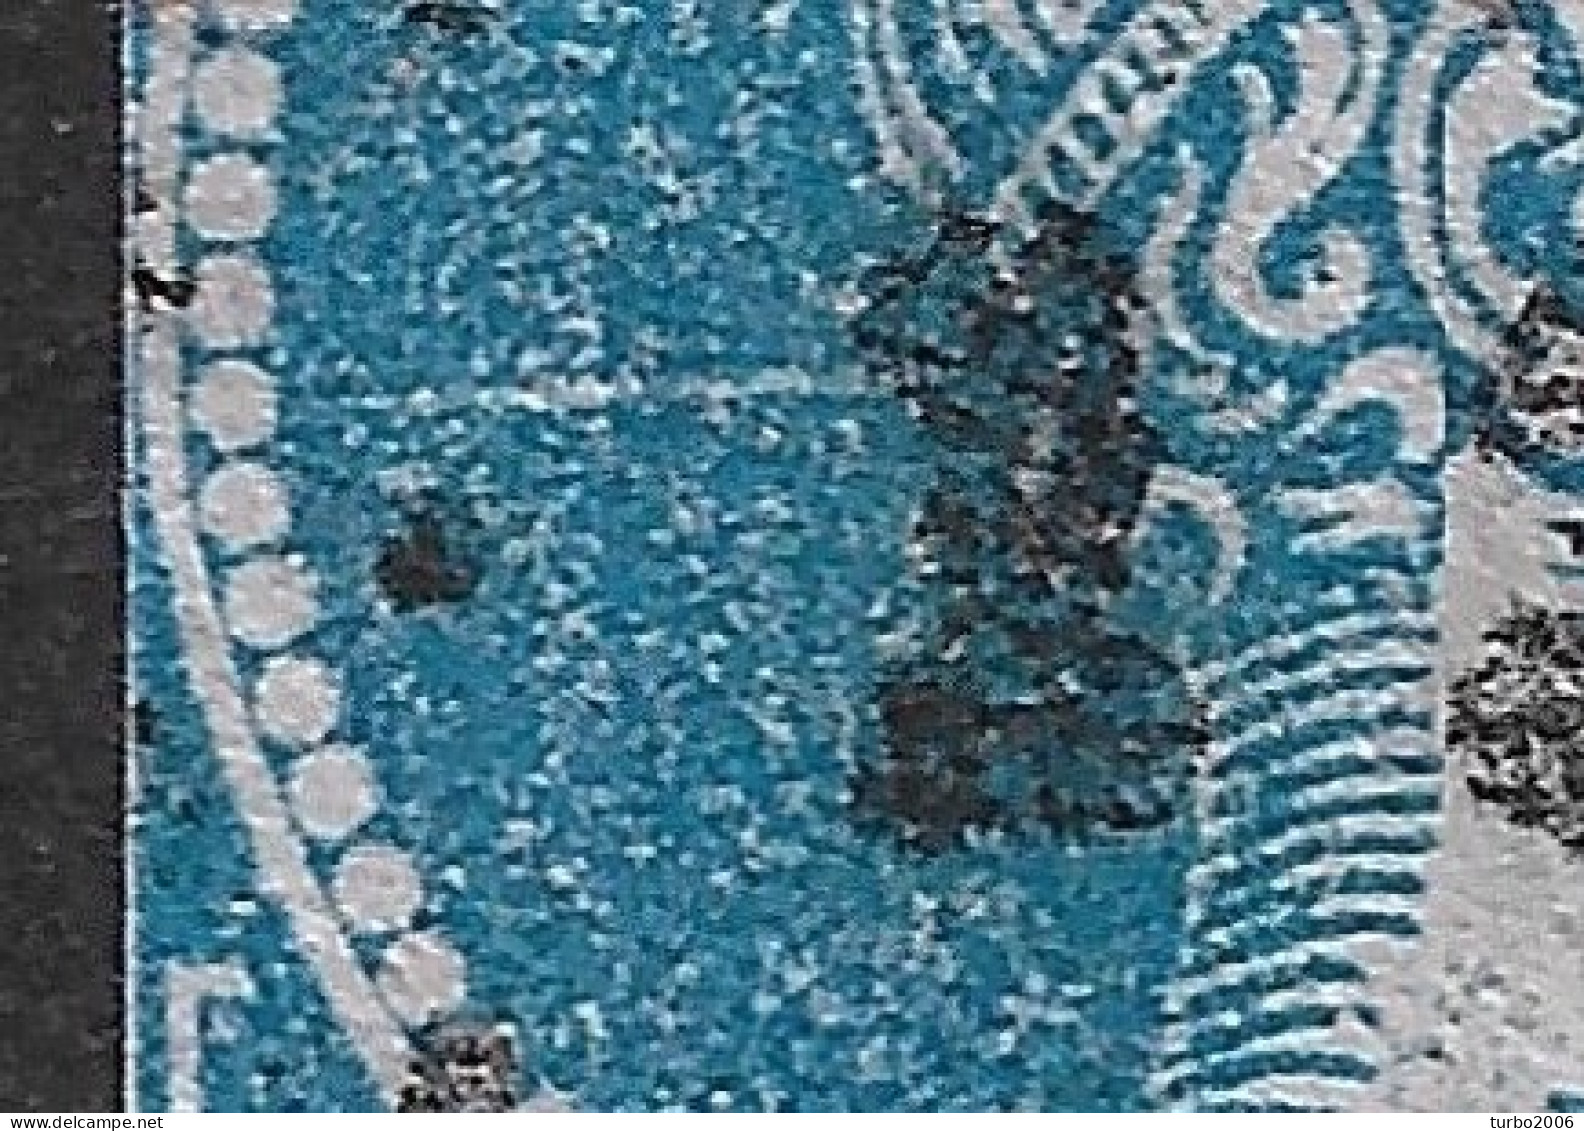 GREECE Plateflaw White Line (20F20) In 1868-69 Large Hermes Head Cleaned Plates Issue 20 L Sky Blue Vl. 39 / H 27 A - Abarten Und Kuriositäten